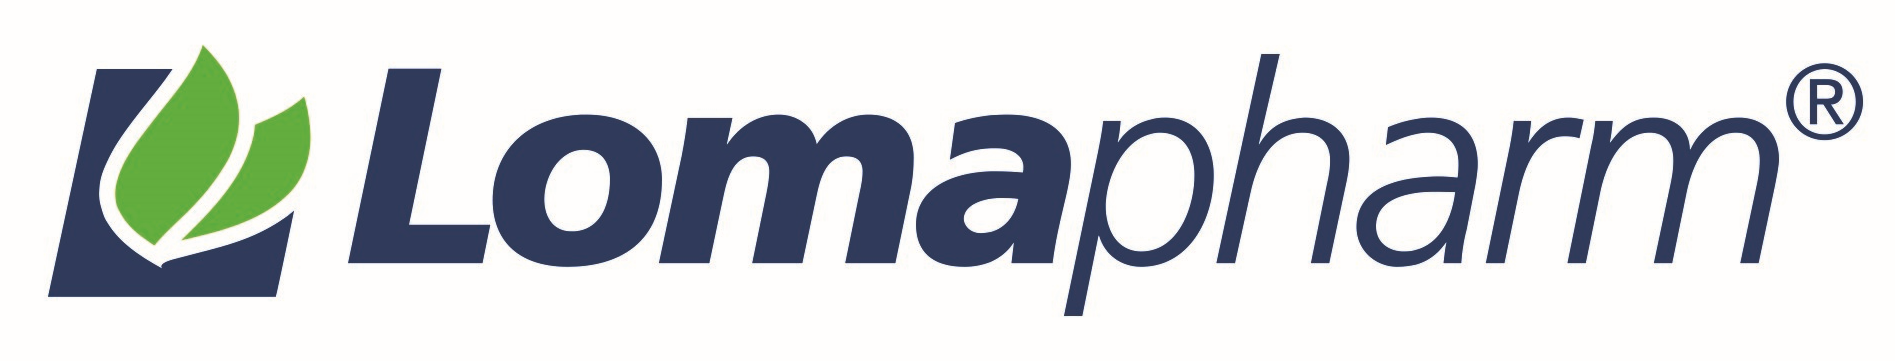 Lomapharm Logo